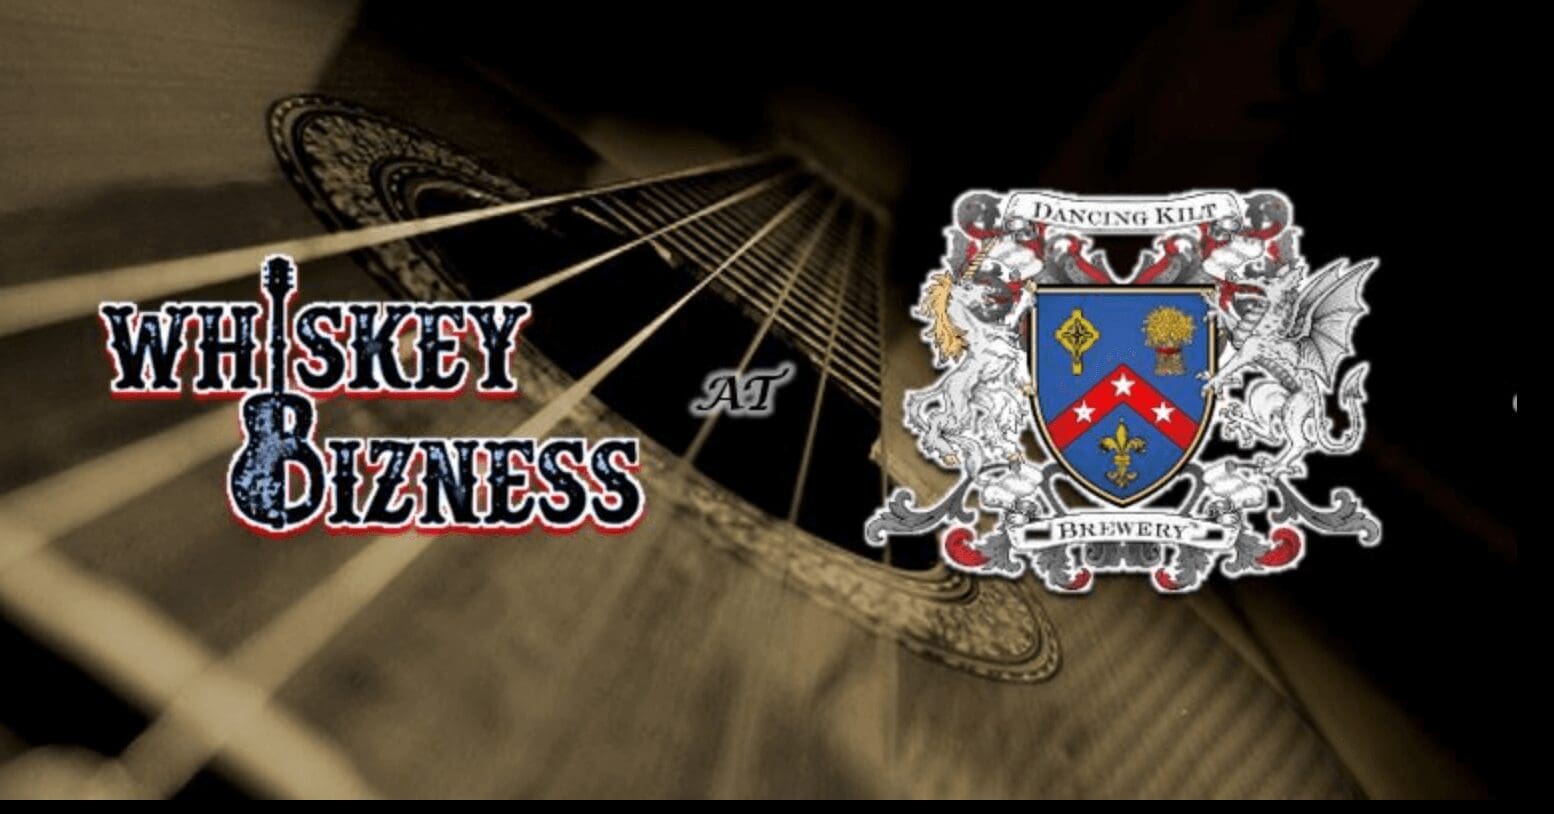 A Whiskey Bizness Logo With a Guitar Close Up